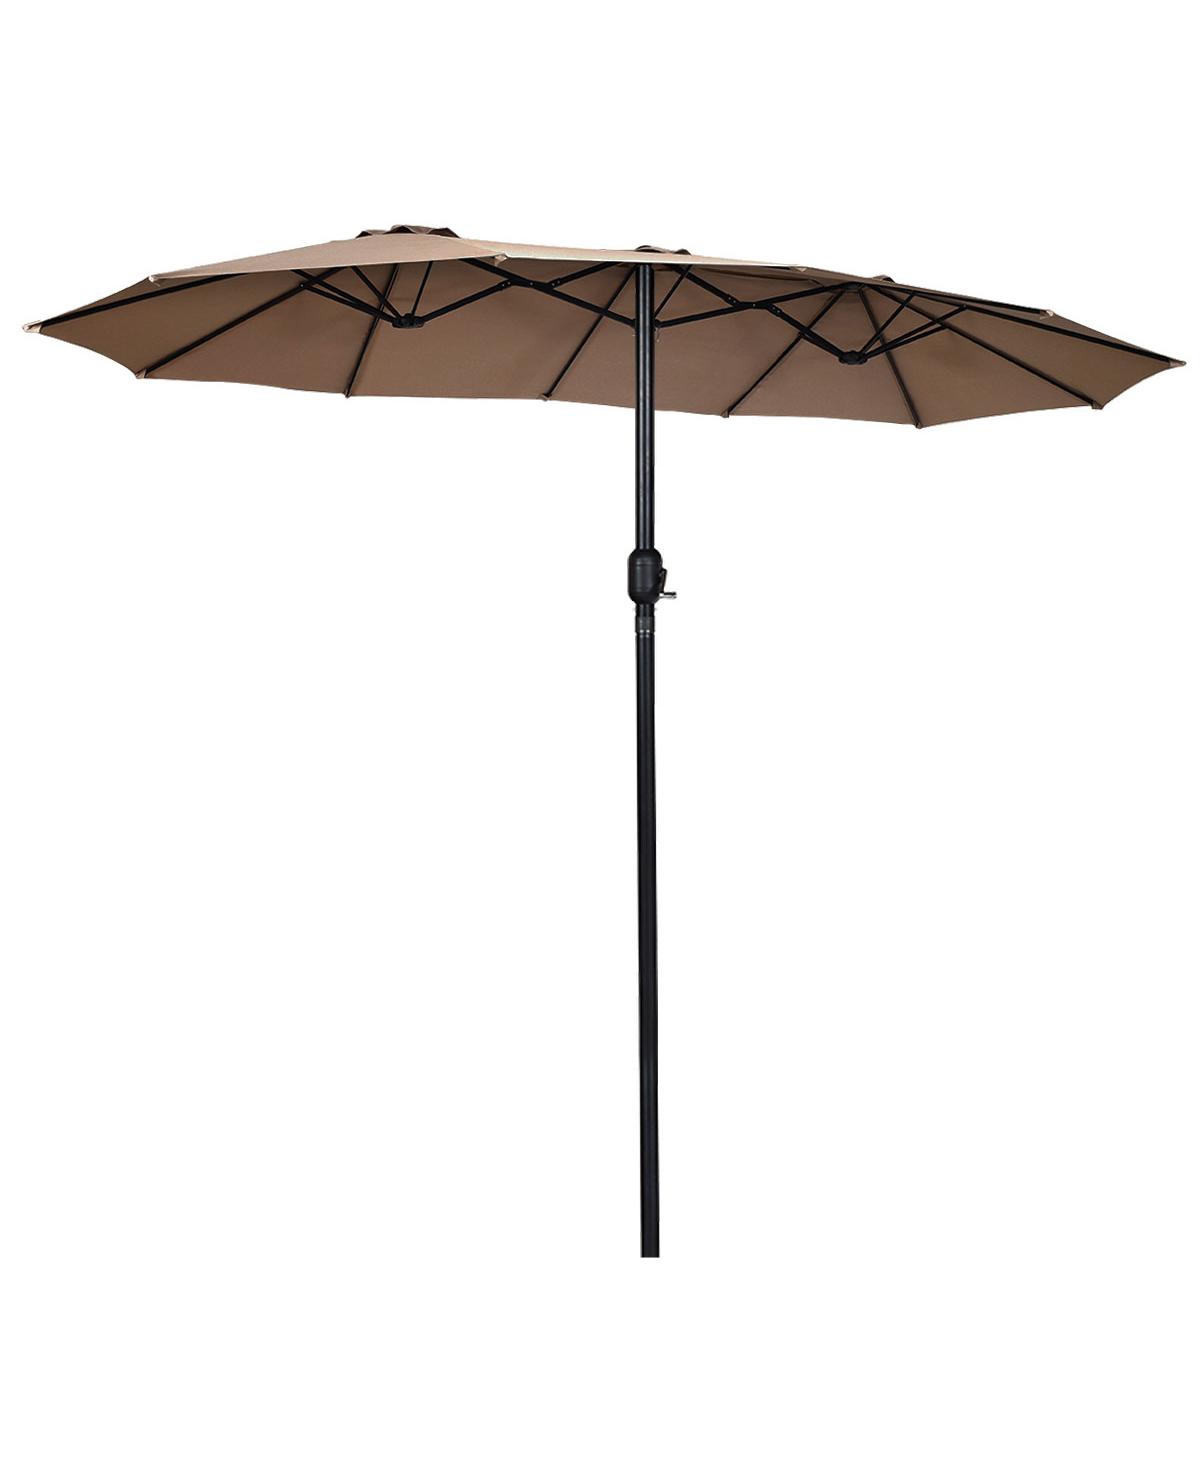 15' Market Outdoor Umbrella Double-Sided Twin Patio Umbrella with Crank - Brown